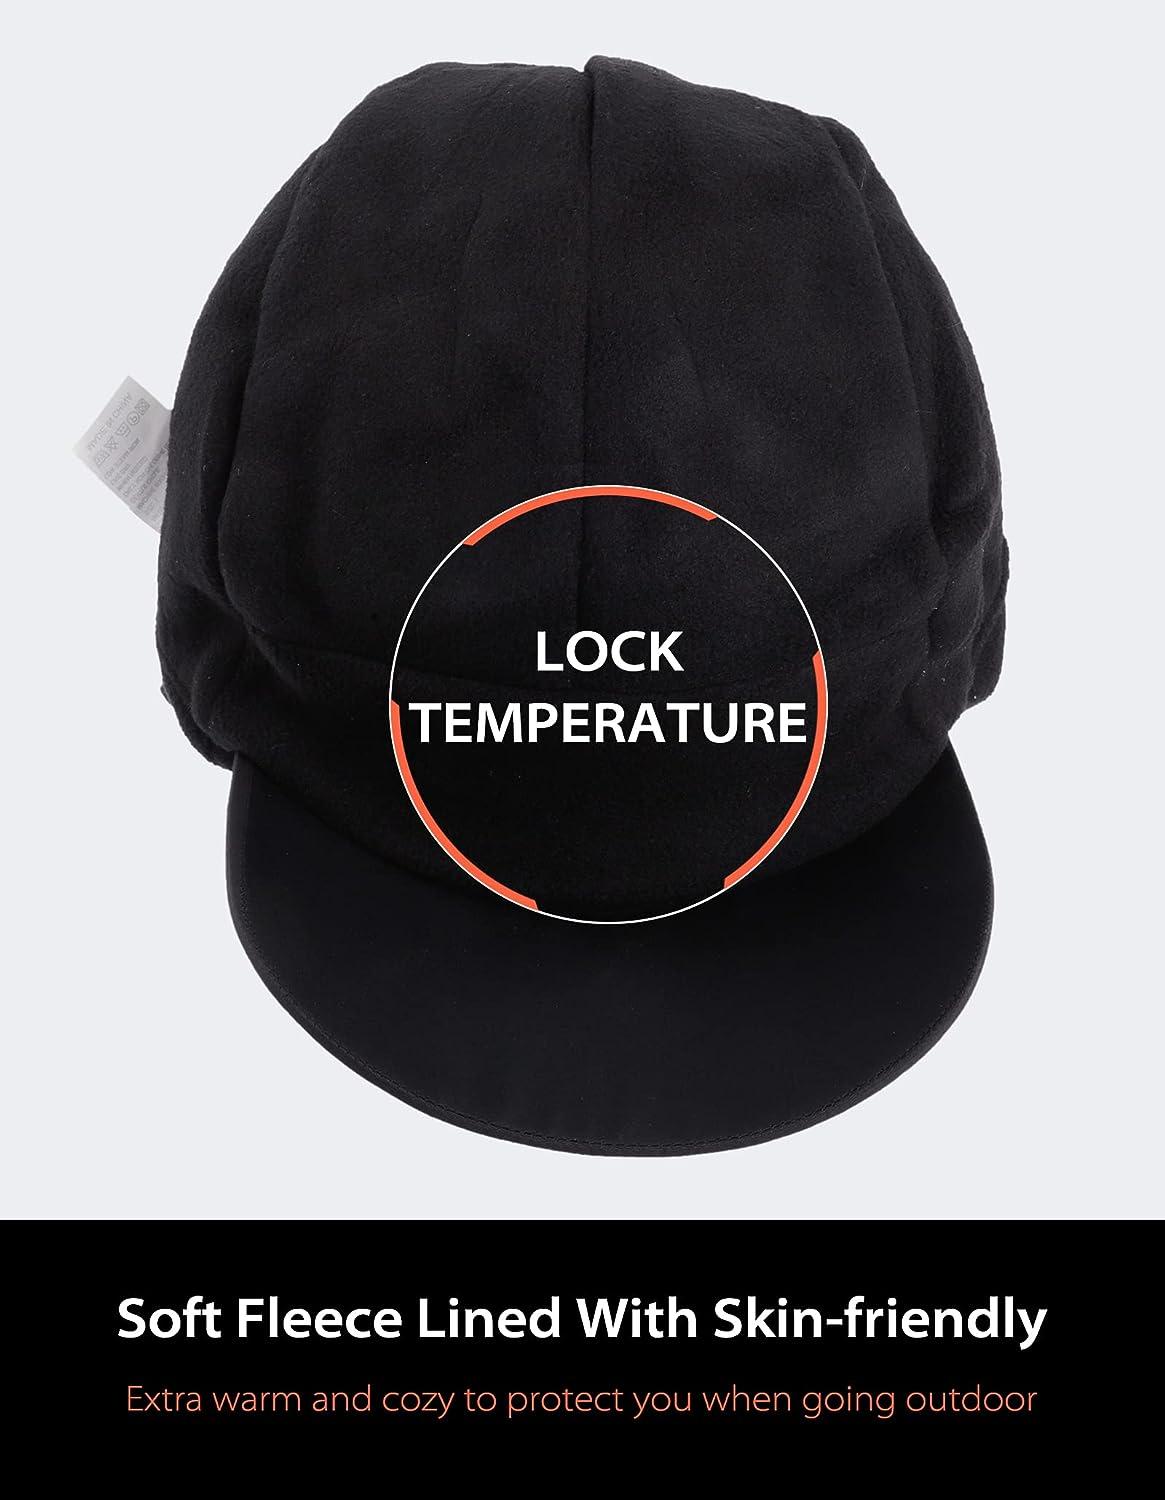 Mwfus Waterproof Hats for Men, Fleece Baseball Cap with Ear Flaps